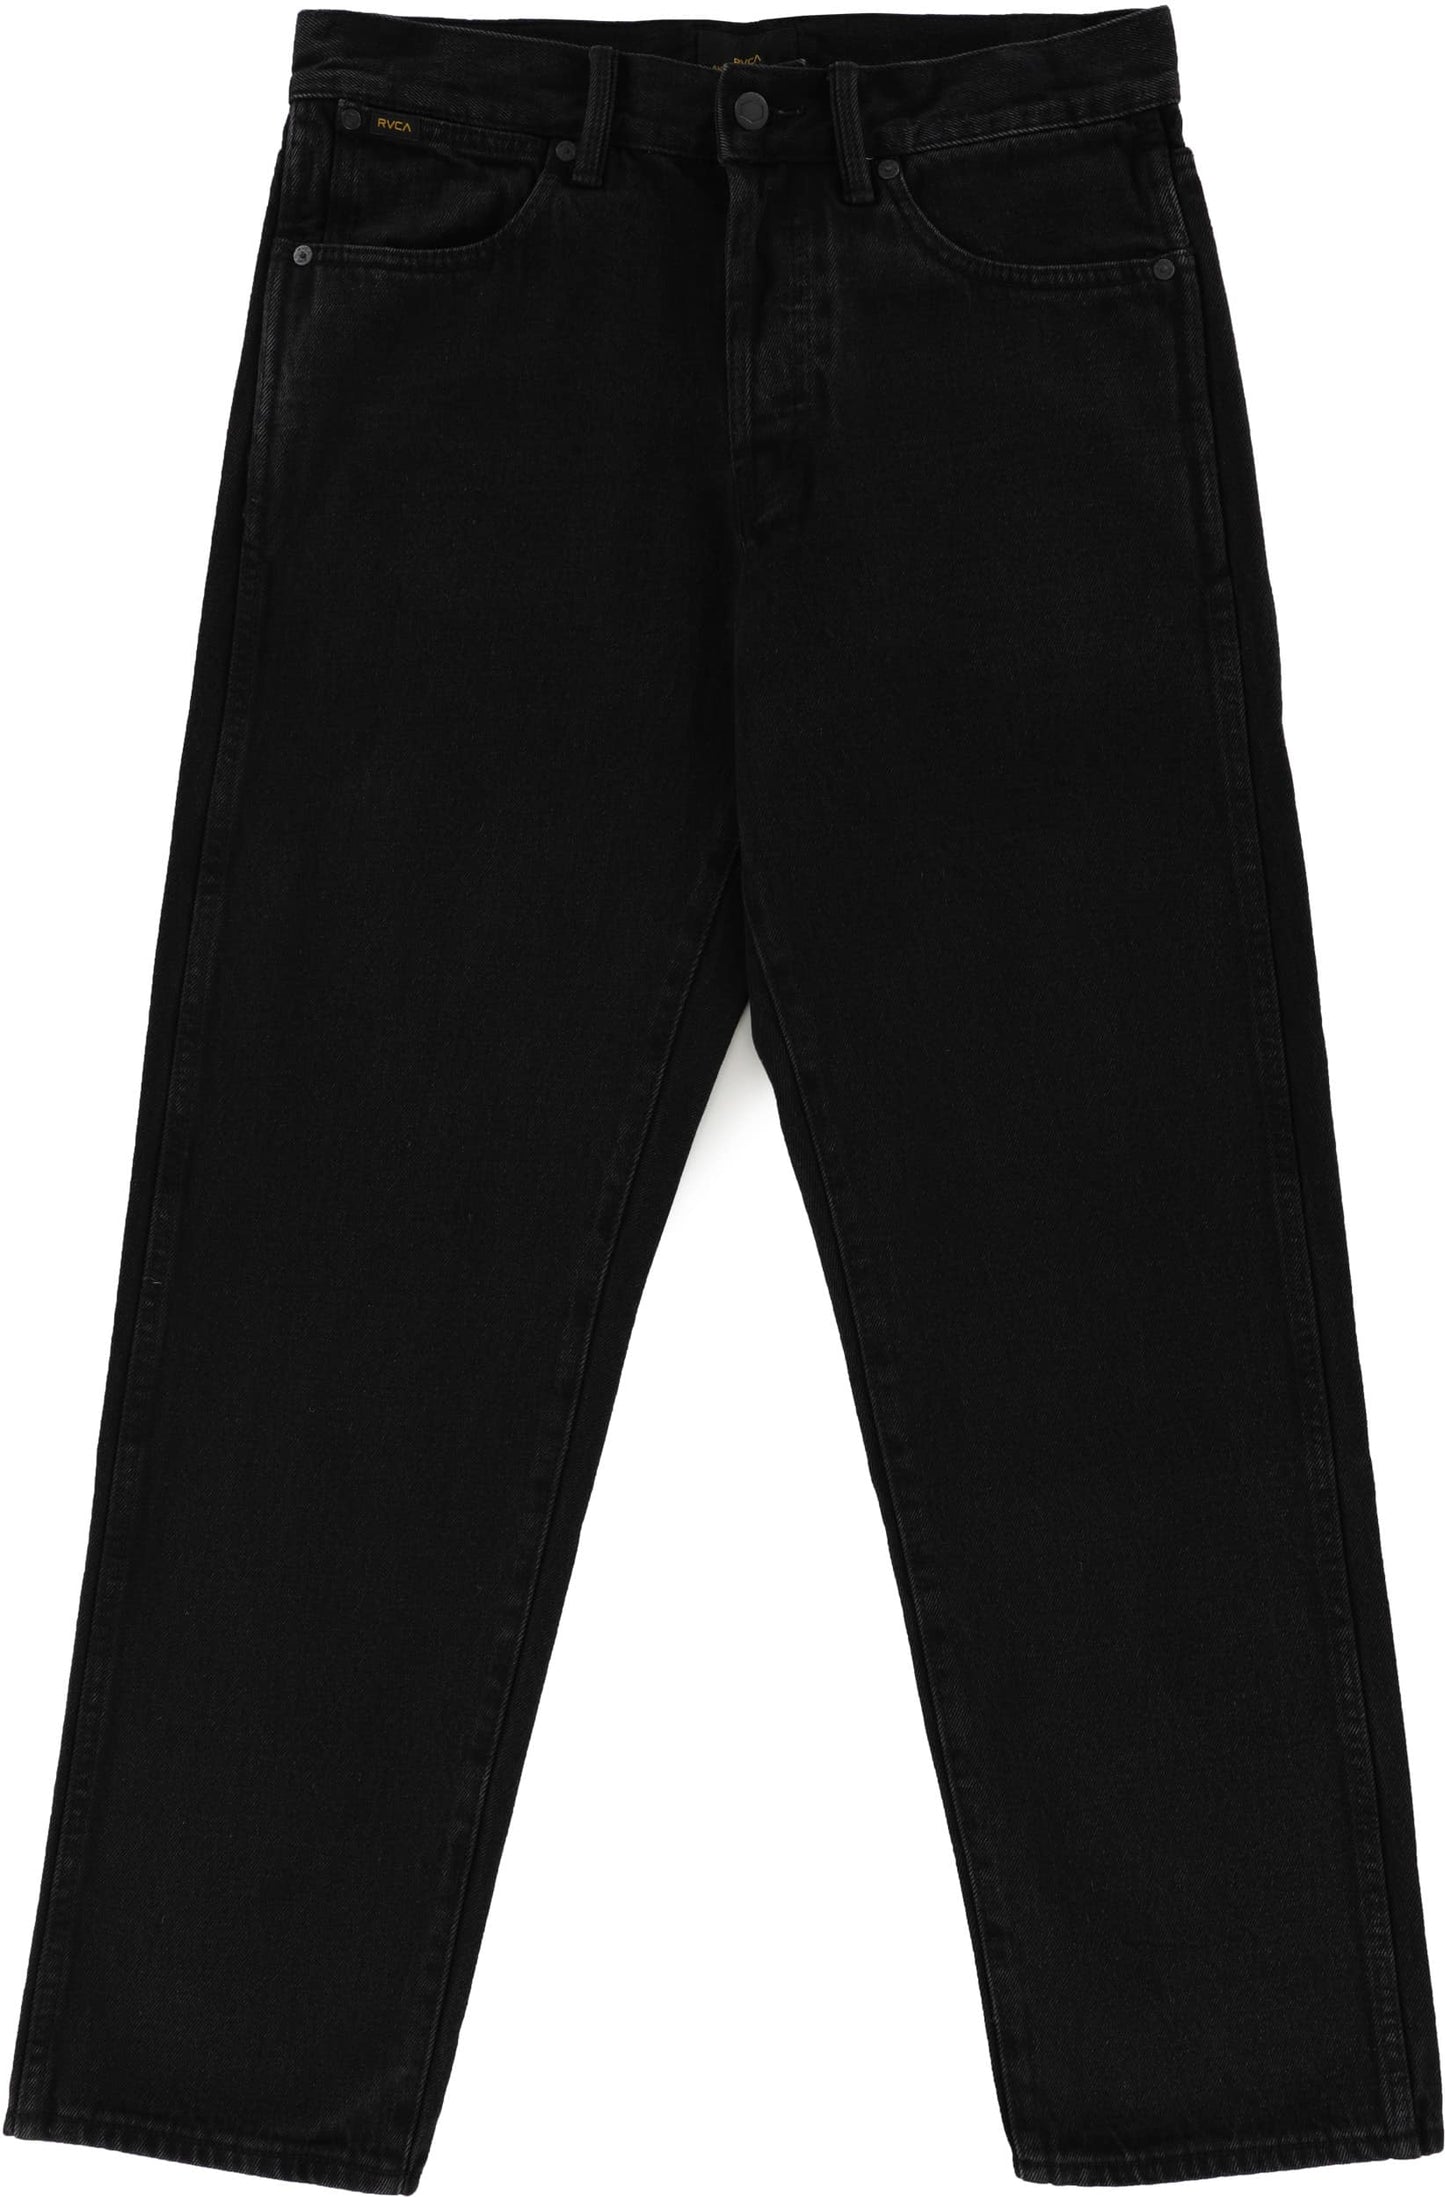 RVCA Reynolds Americana Denim Jeans - Black Rinse